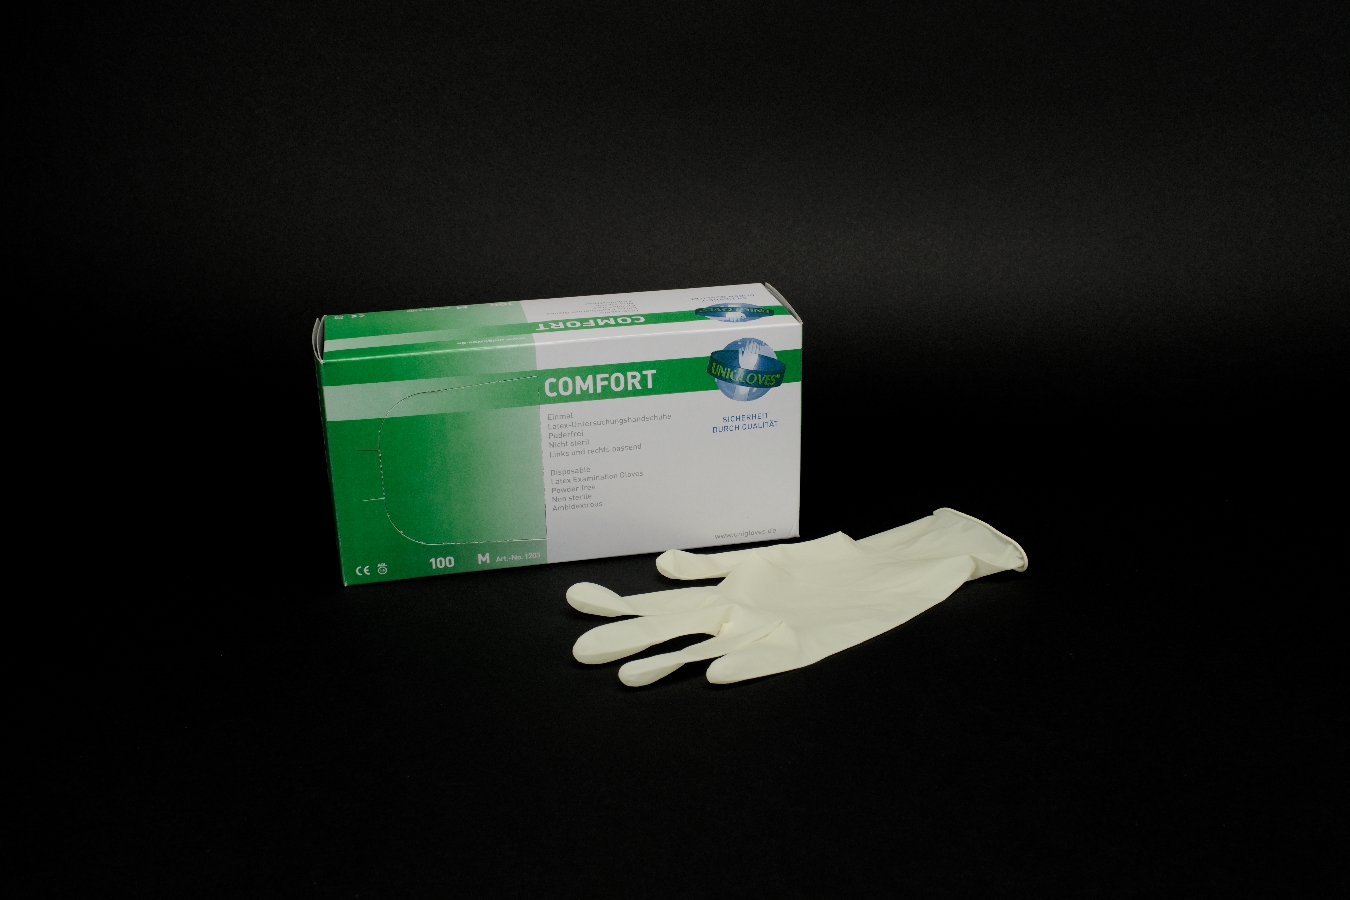 Praxis Produkte: Comfort Latex Handschuh pdfr M 100 Stück - Einmalhandschuhe, Einweghandschuhe  bestellen